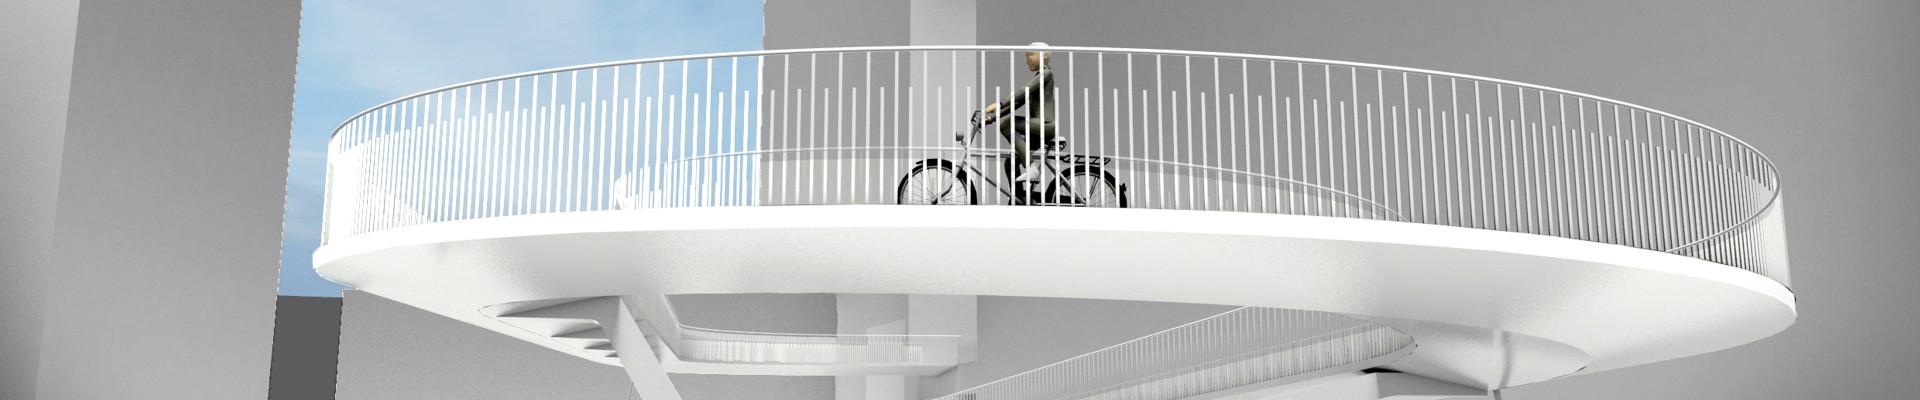 Nieuwe fietshelling Parkbrug © Ney & Partners